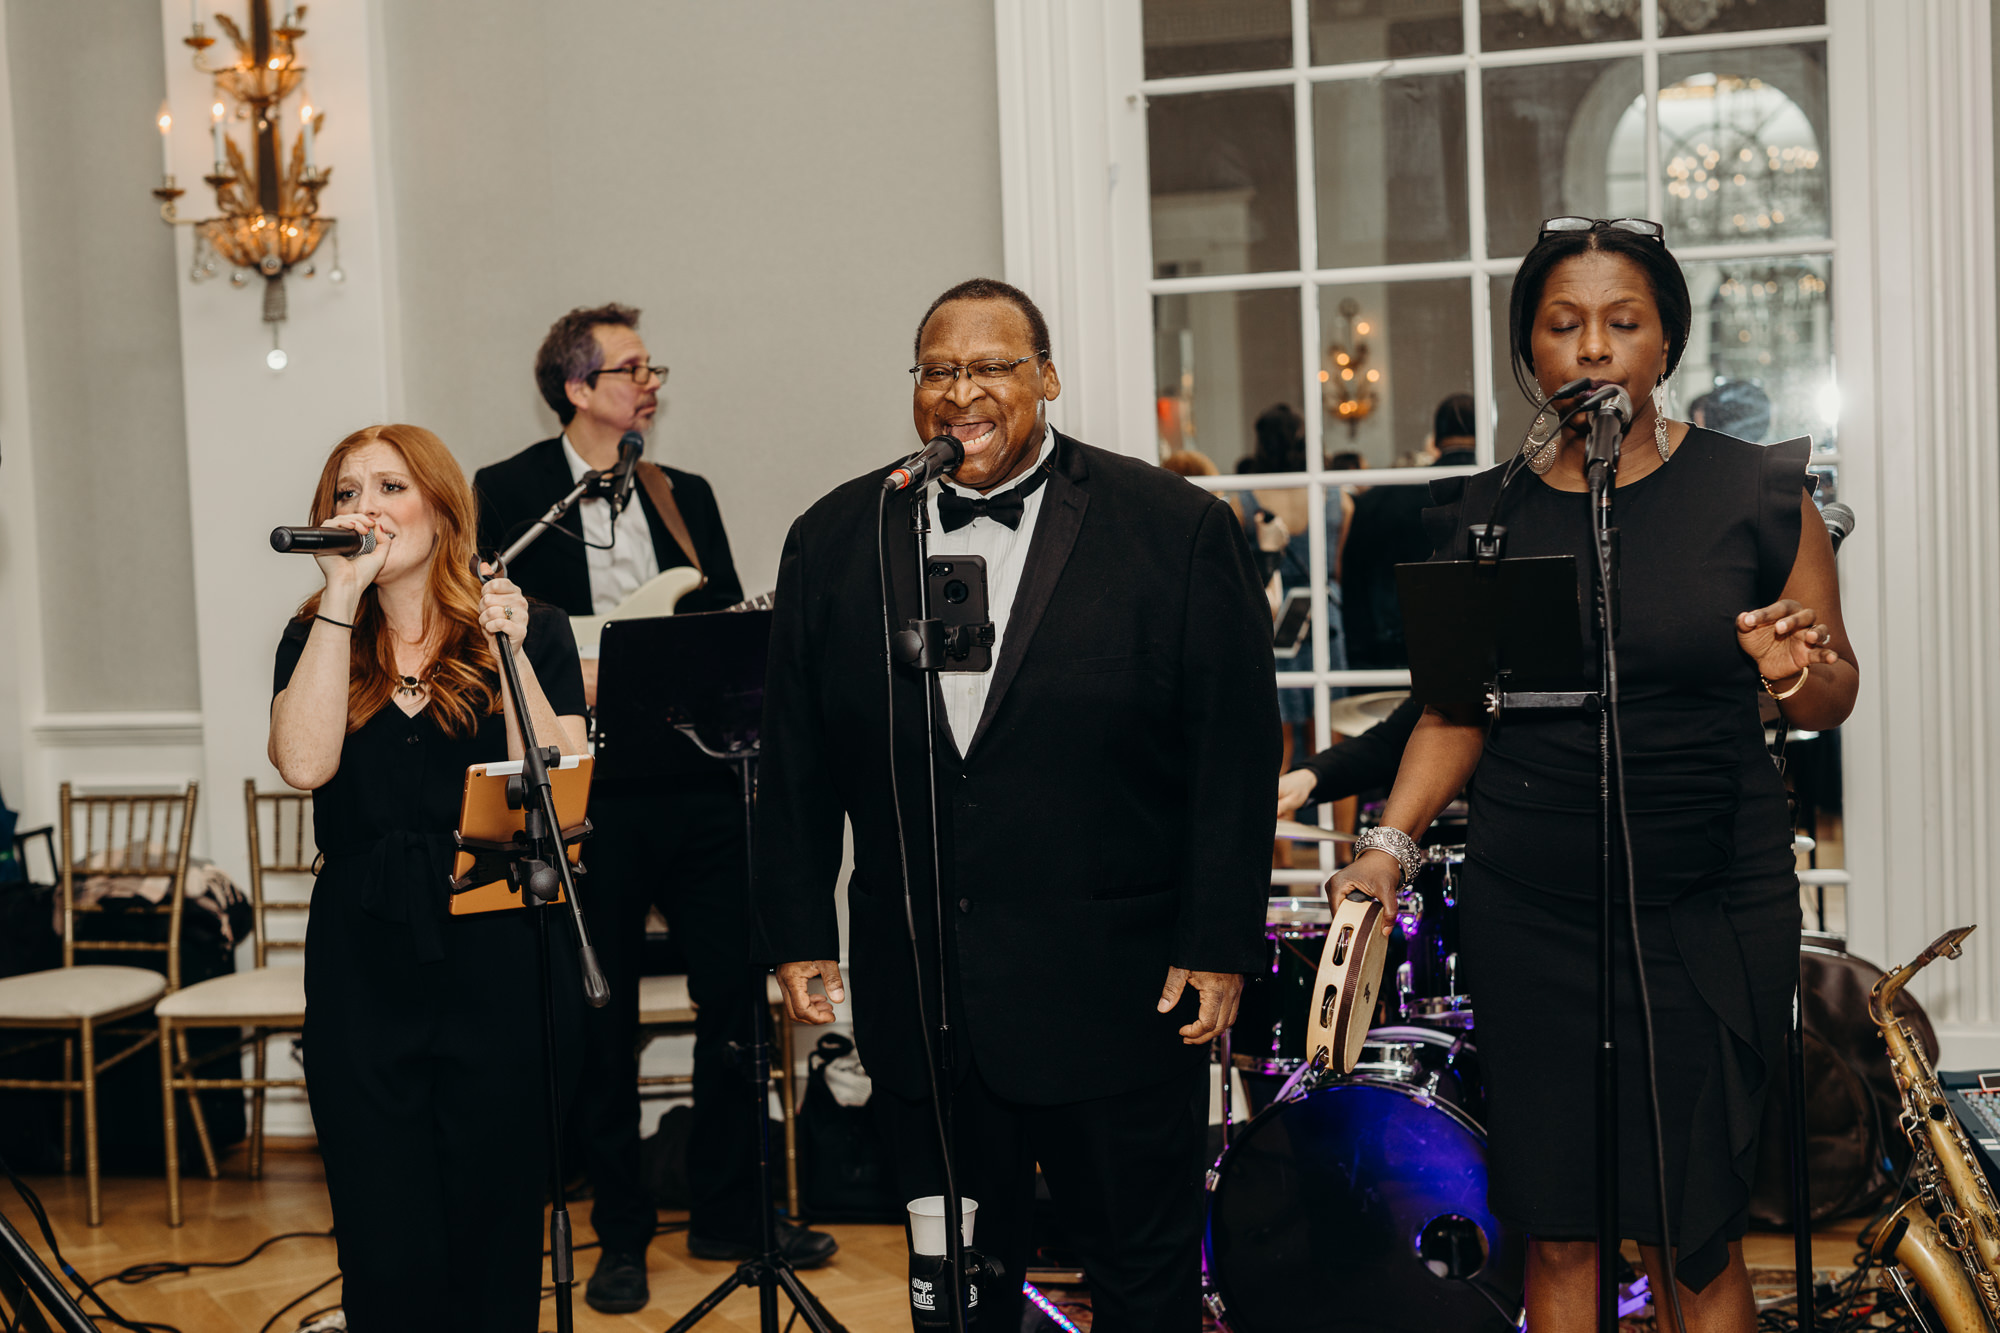 wedding band sings at cosmopolitan club in new york city, ny